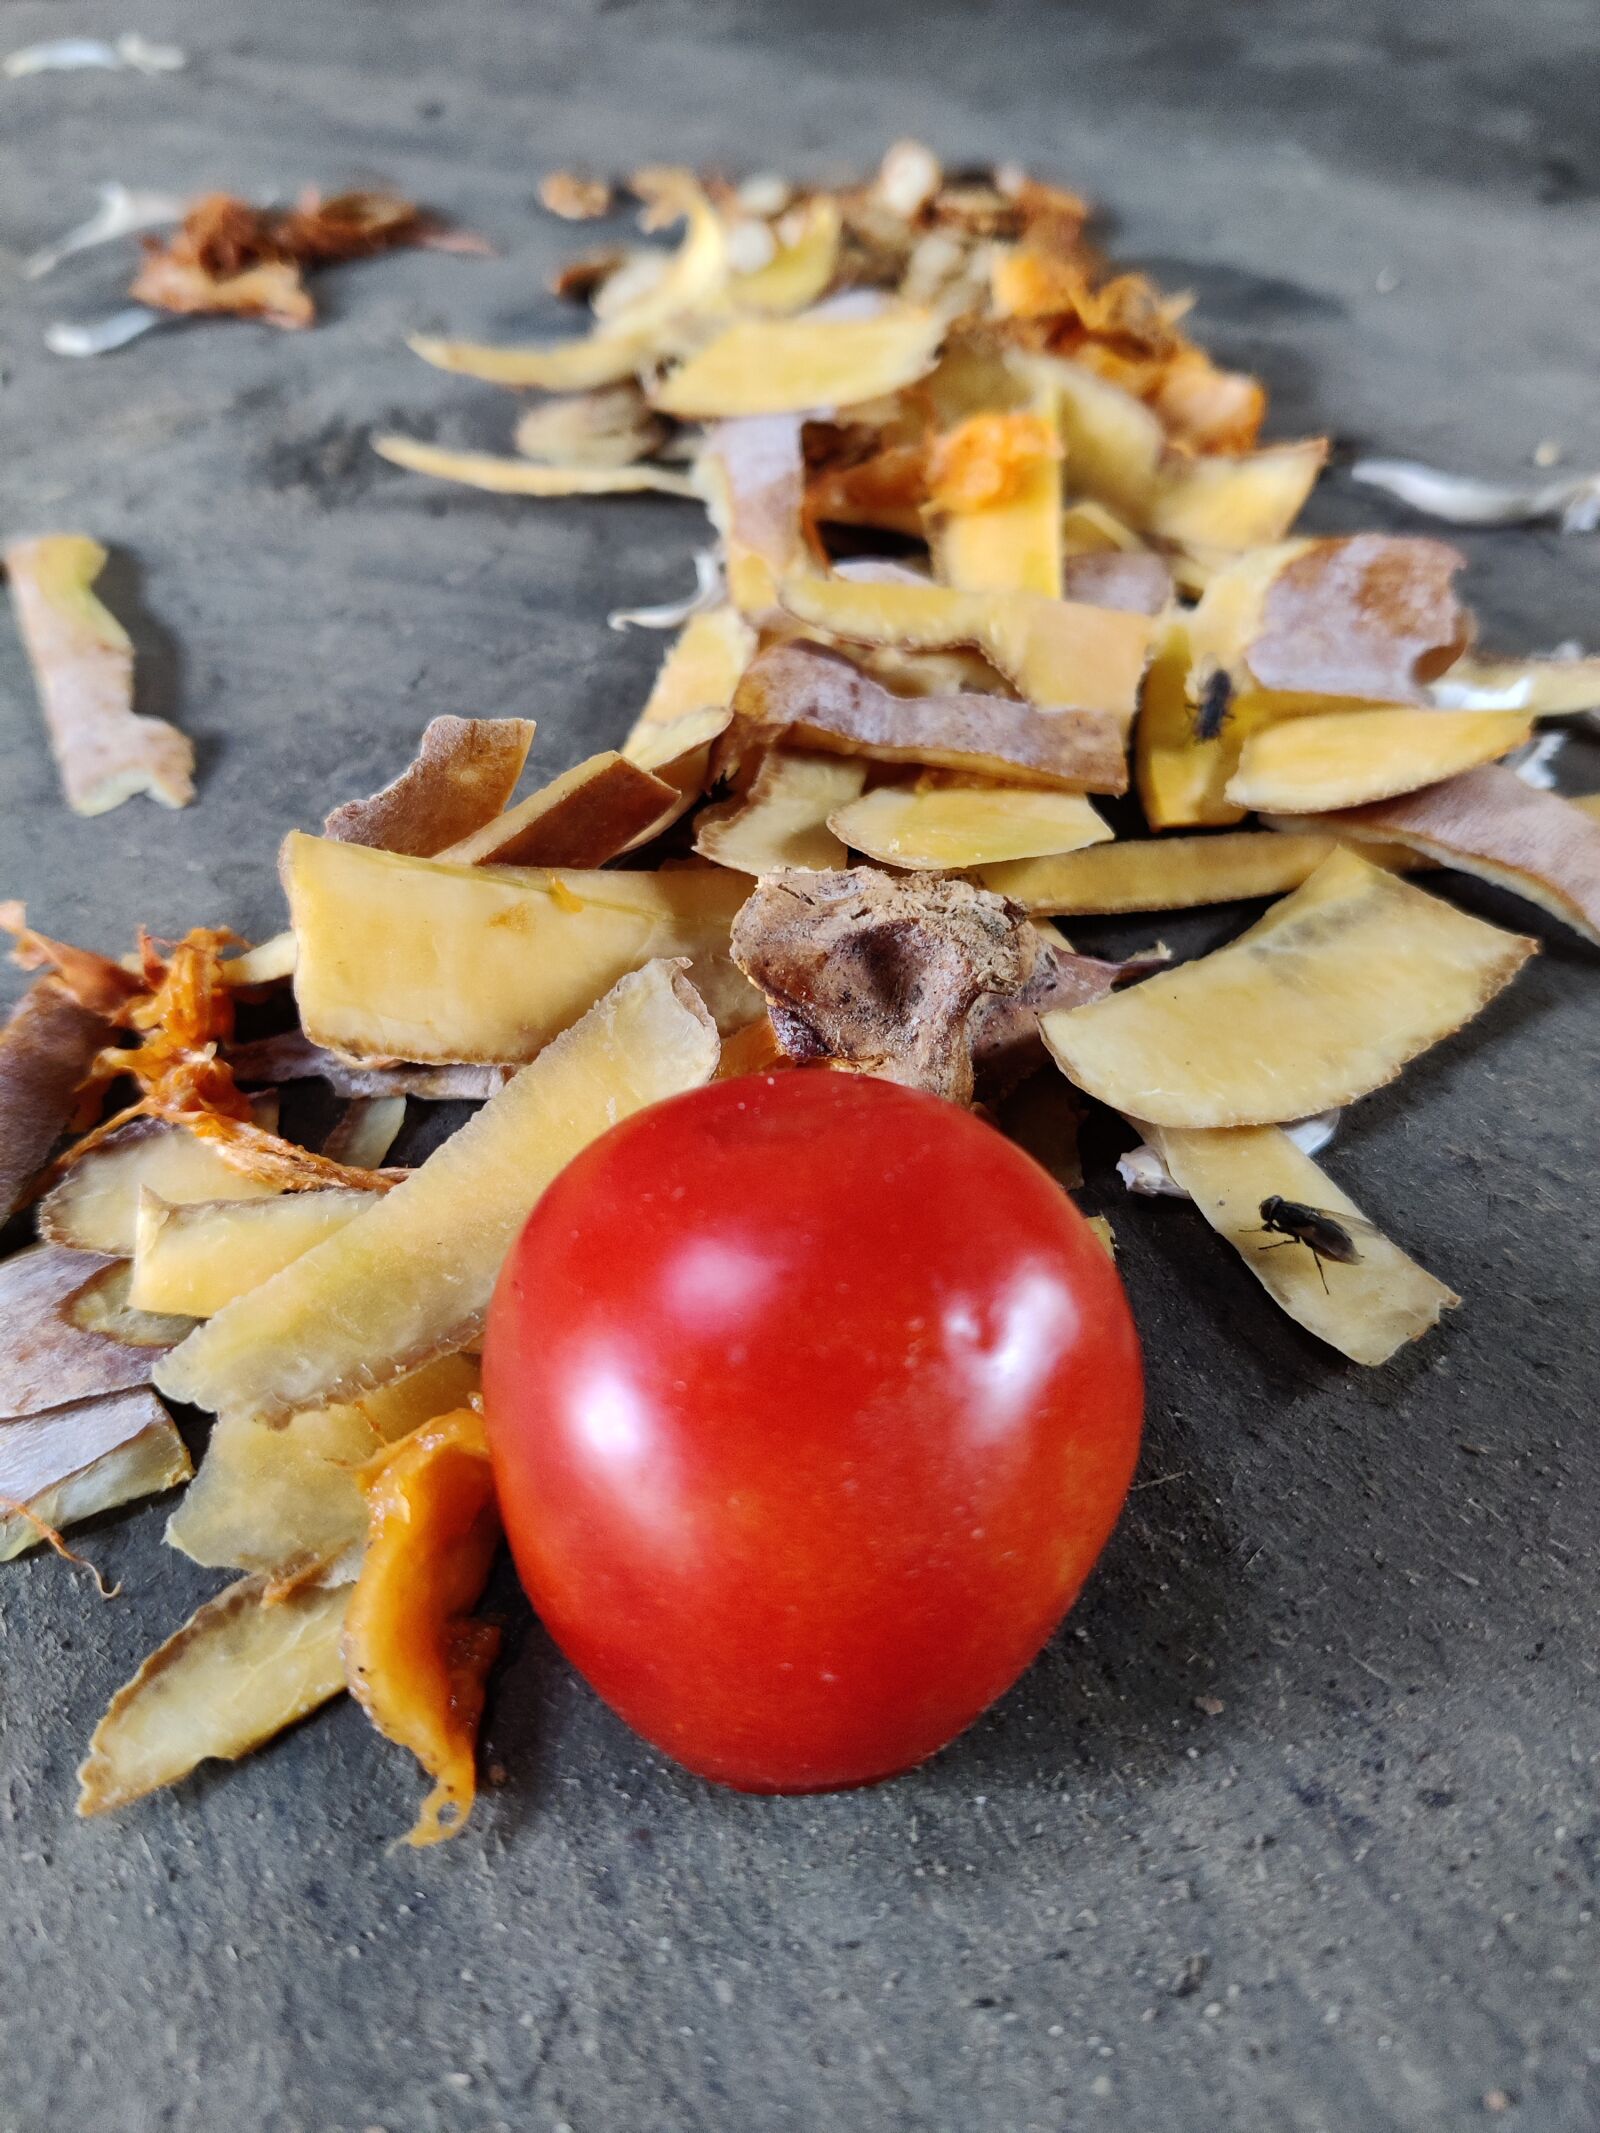 OnePlus AC2001 sample photo. Tomato, garbage, beautiful garbage photography